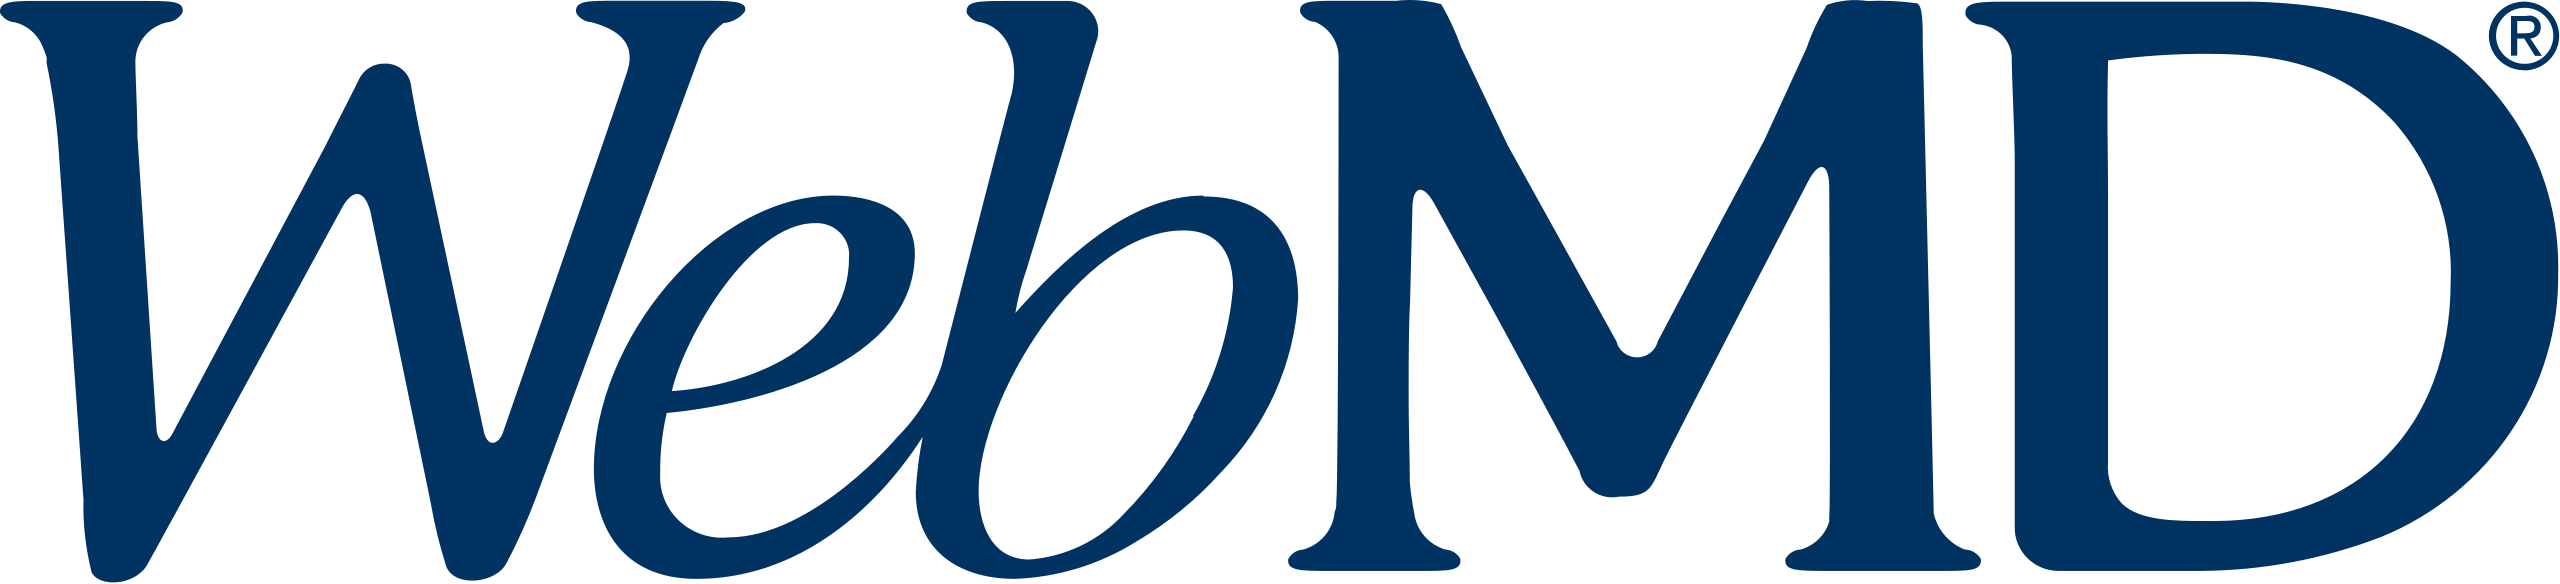 WebMD_logo_blue